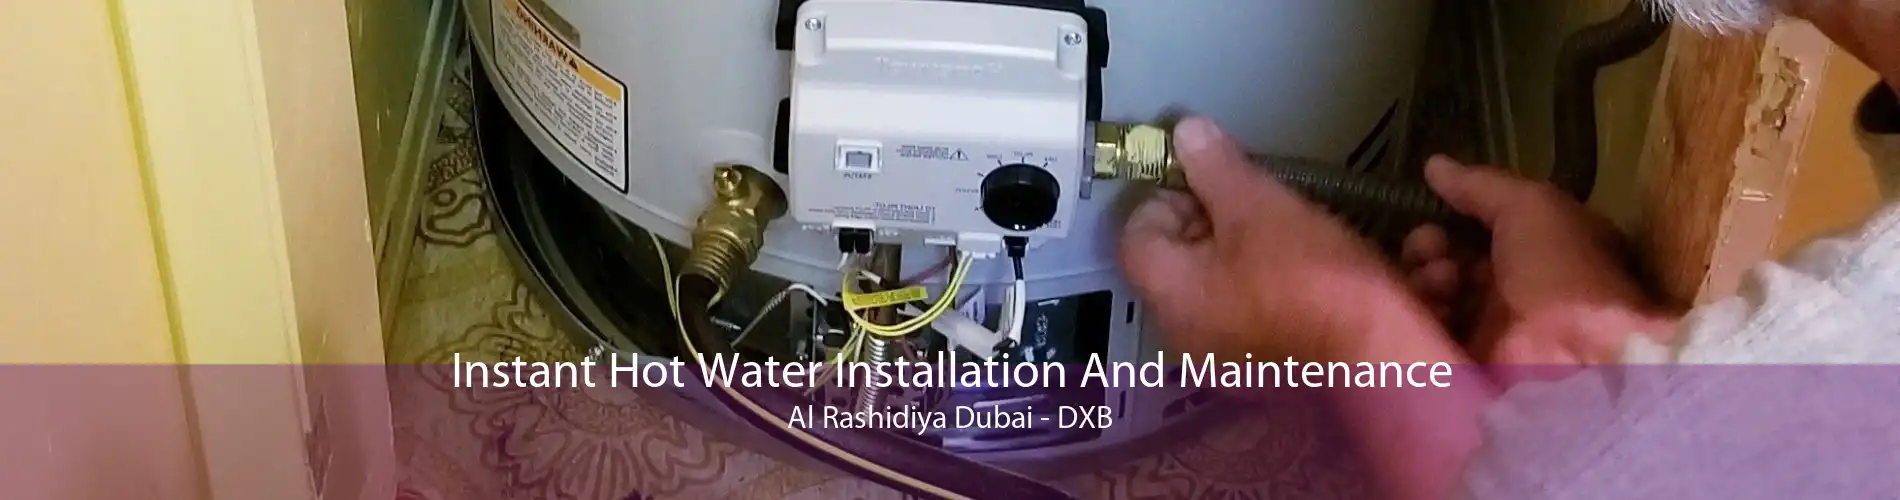 Instant Hot Water Installation And Maintenance Al Rashidiya Dubai - DXB